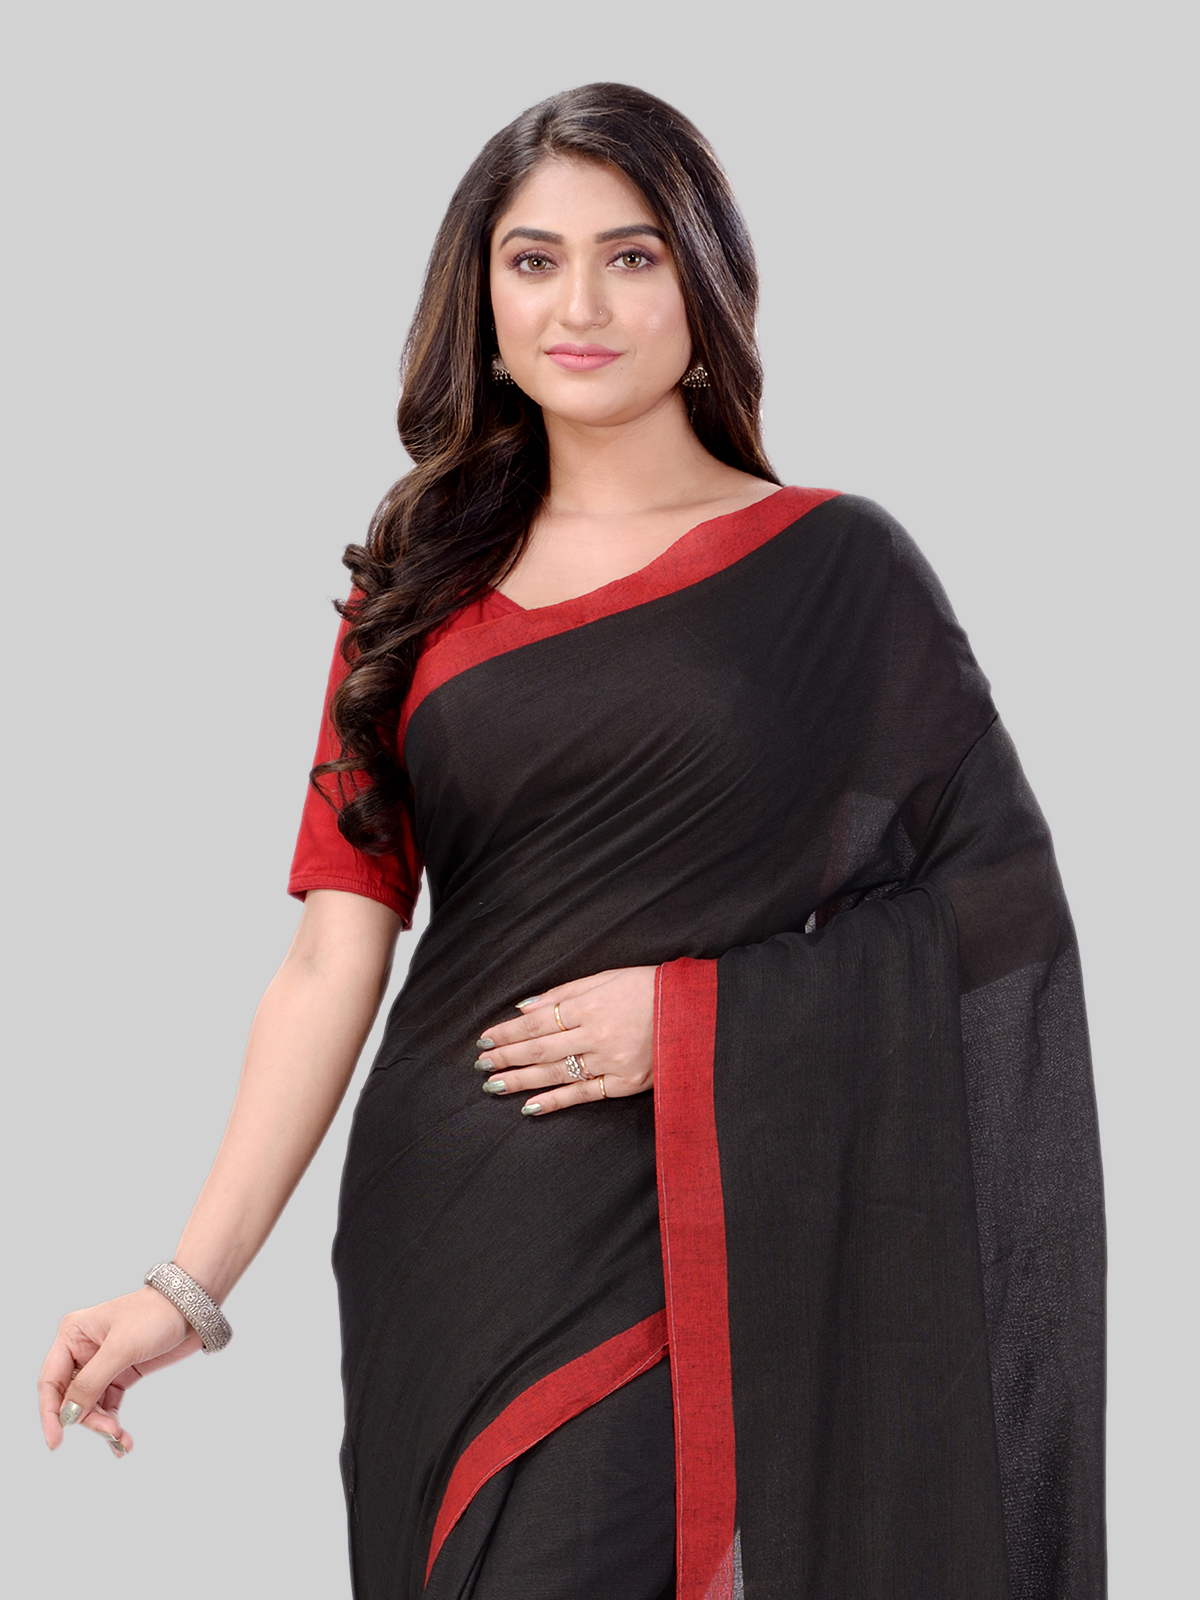 DESH BIDESH Women`s Handloom Pure Cotton Saree Abhiprithi Royal Design Without Blouse Piece(Black)